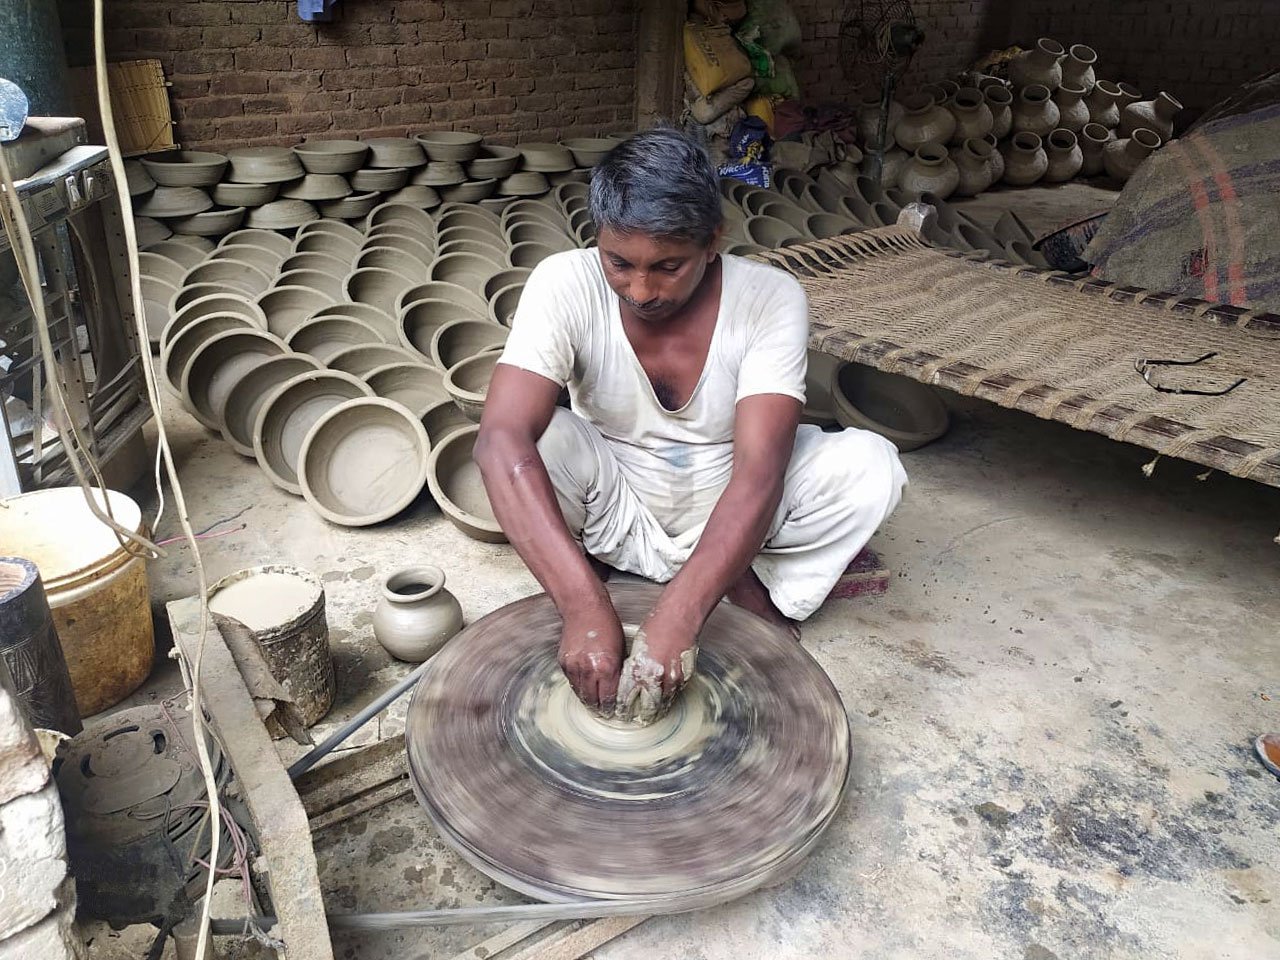 Feet of clay: Chhattisgarh's potters, locked down